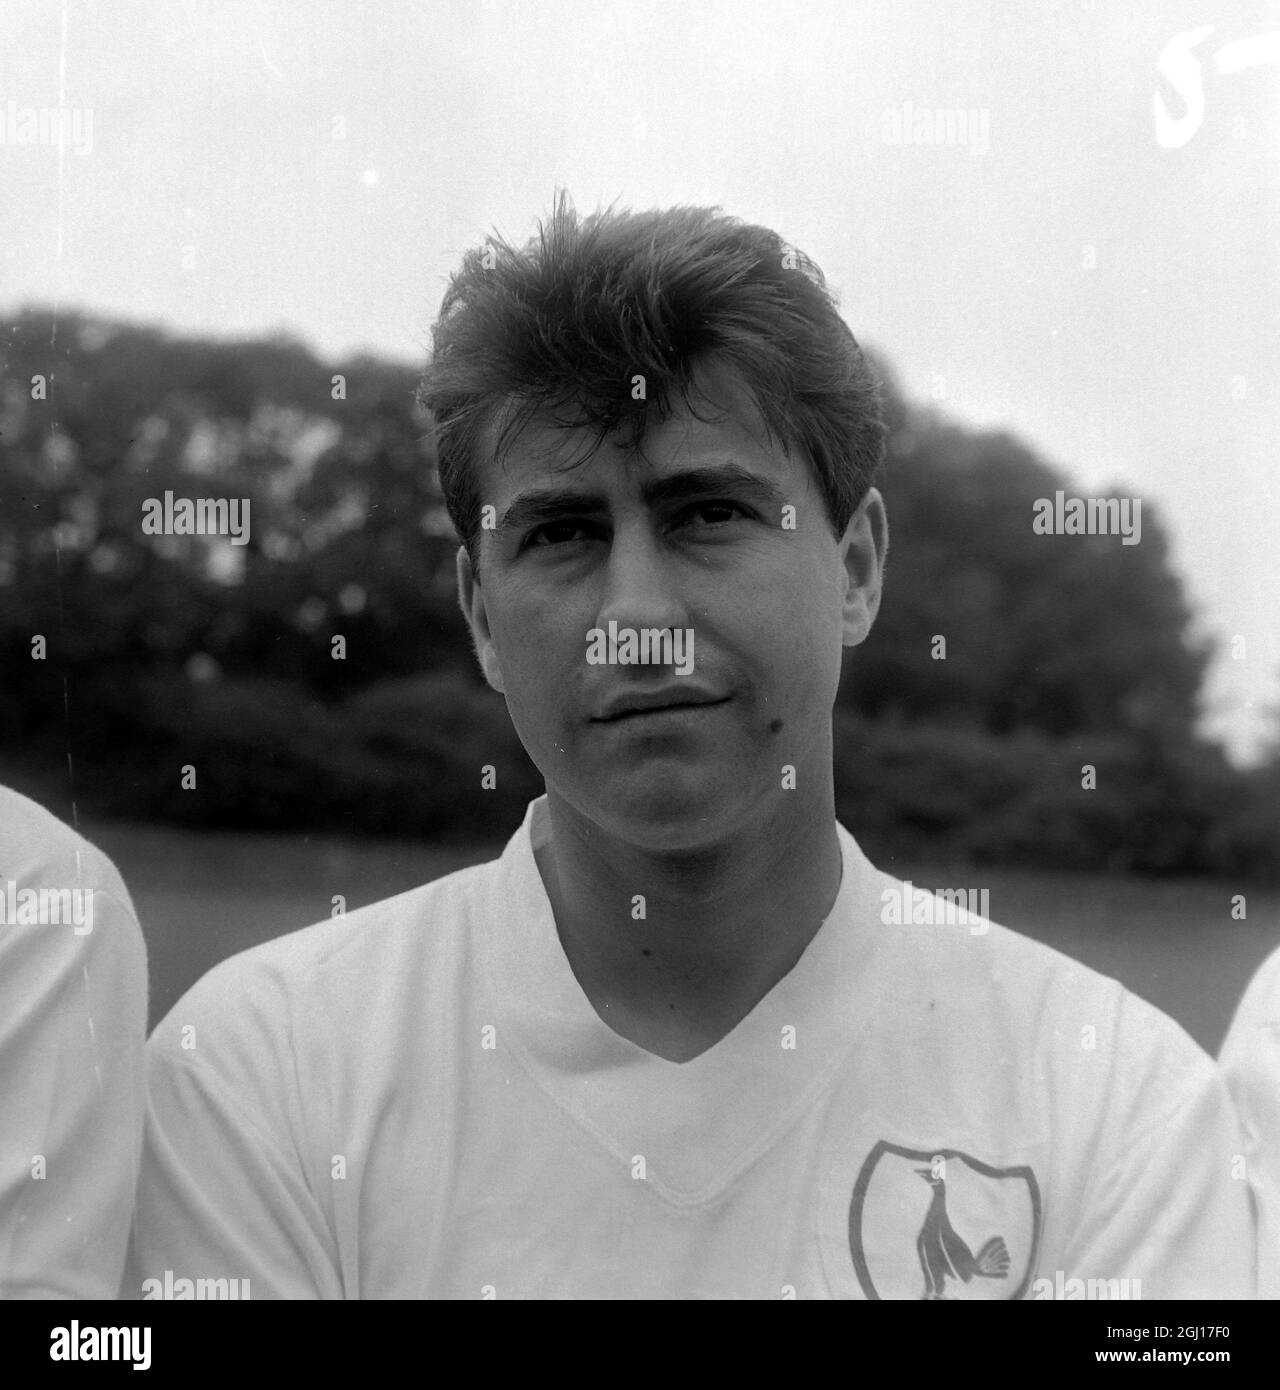 FOOTBALLER K R BARTON OF TOTTENHAM HOTSPUR SPURS FOOTBALL CLUB - PORTRAITS 1963-4 TEAM - ; 2 AUGUST 1963 Stock Photo